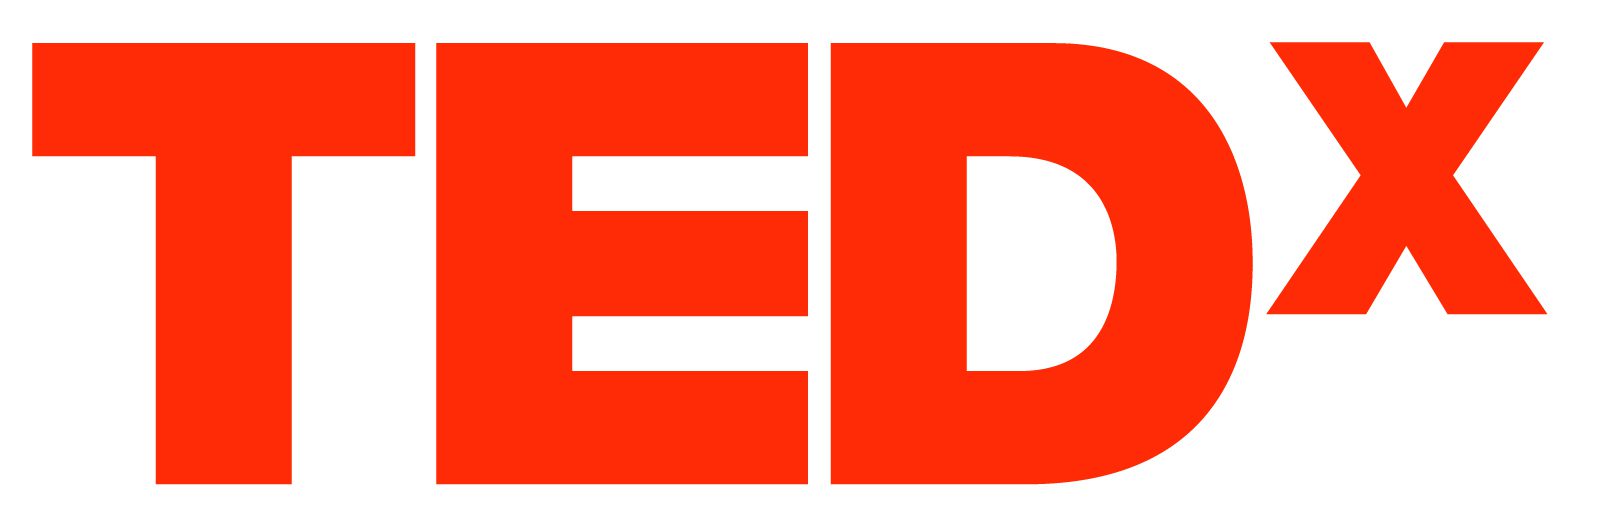 TEDx Logo Sydney 022309